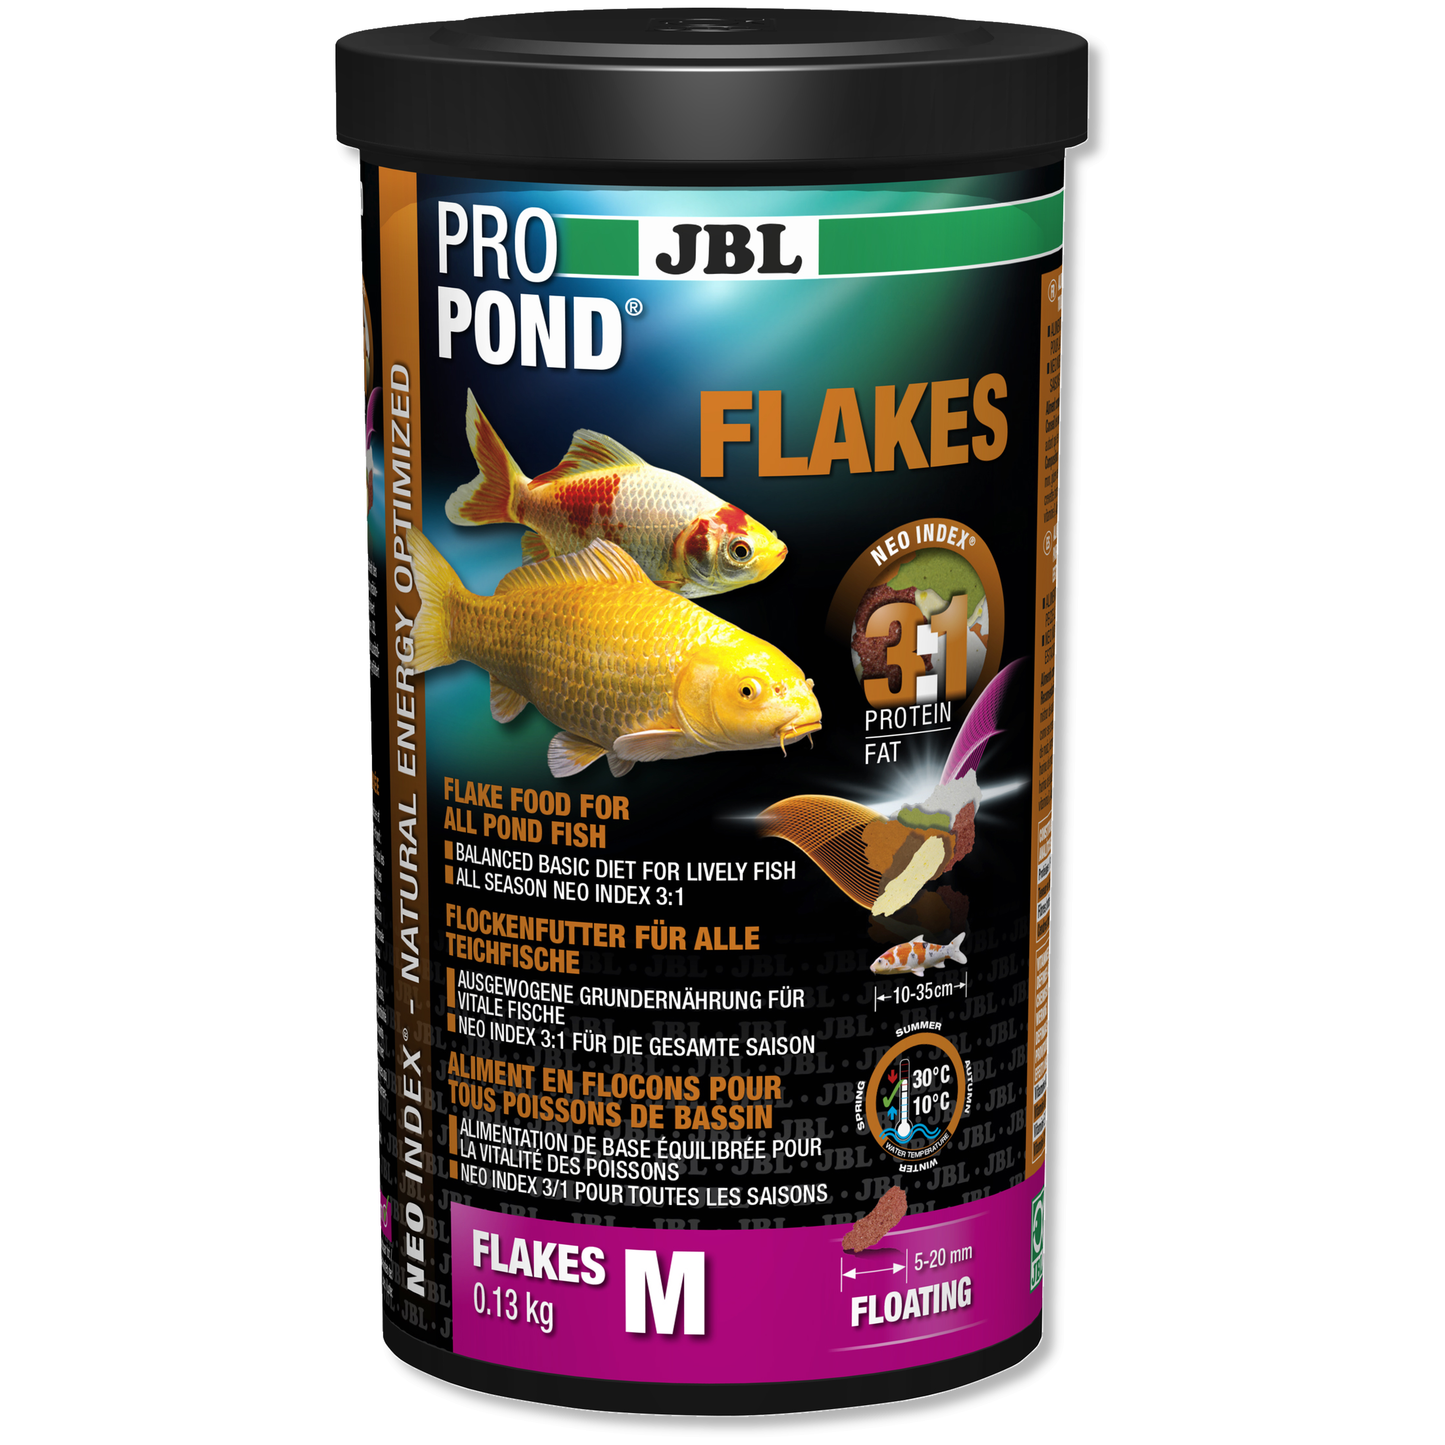 JBL Pond Flakes